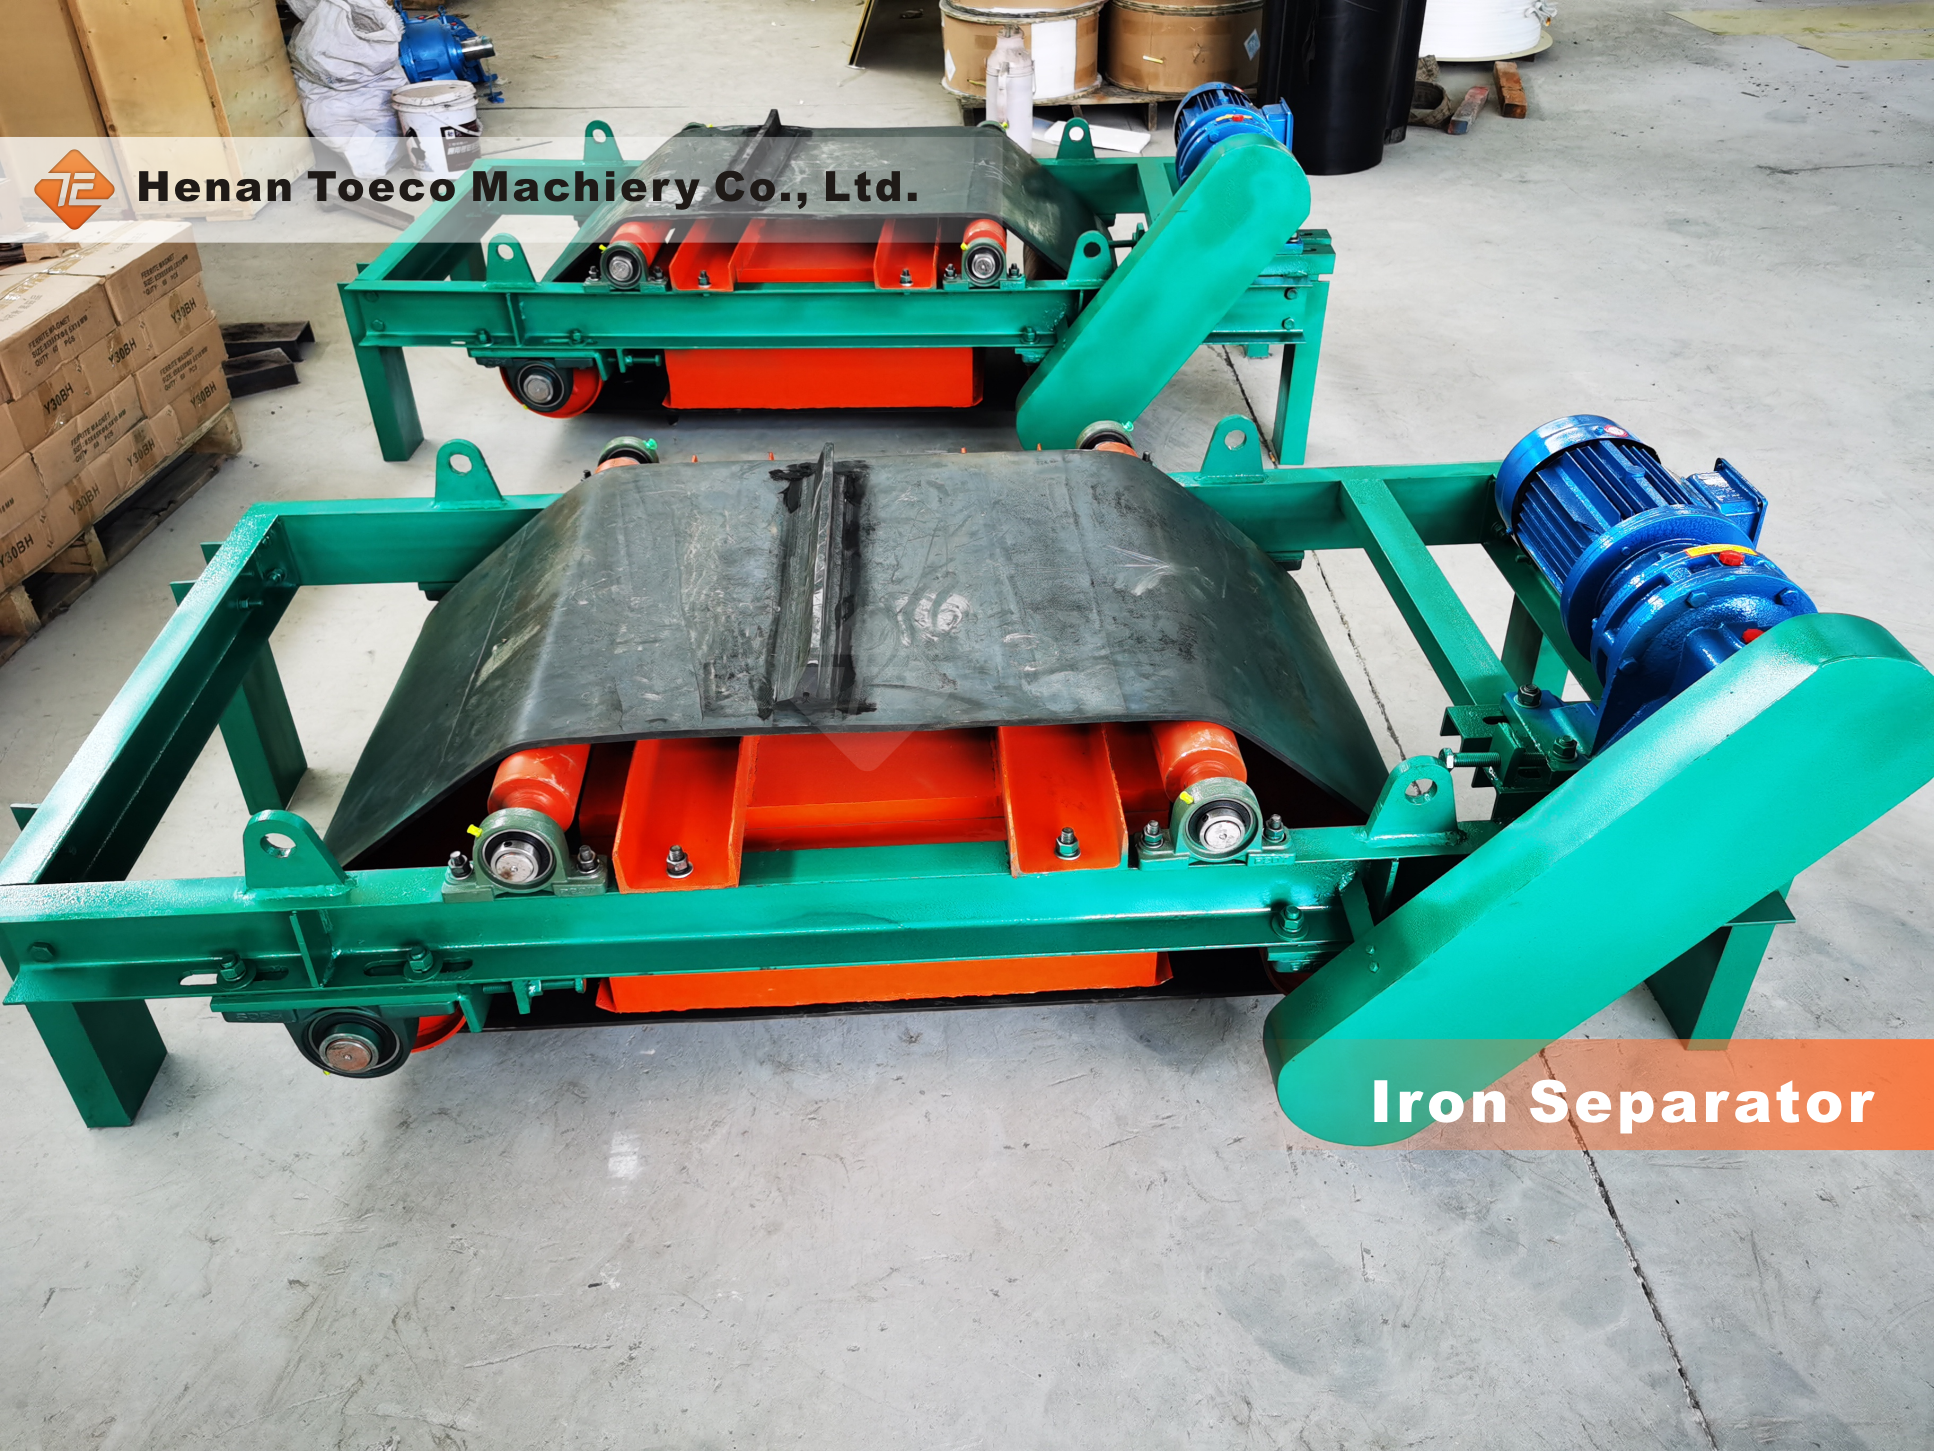 Iron Separator